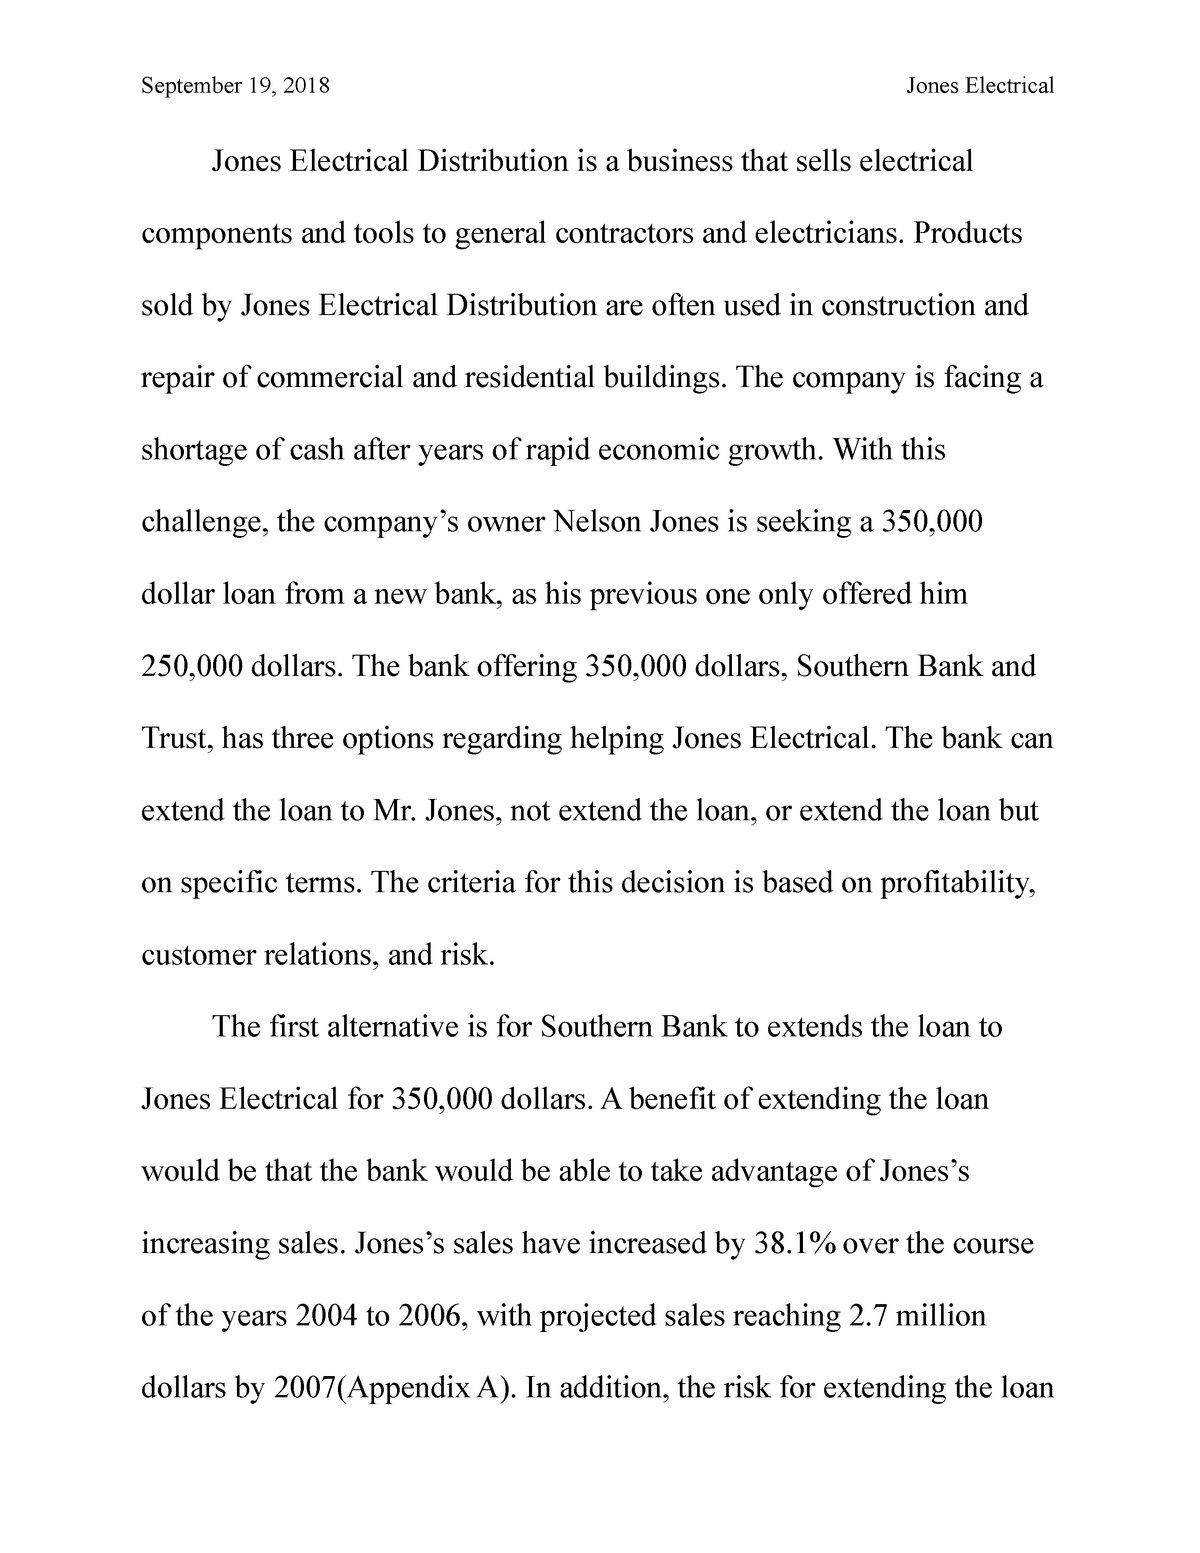 jones electrical distribution case